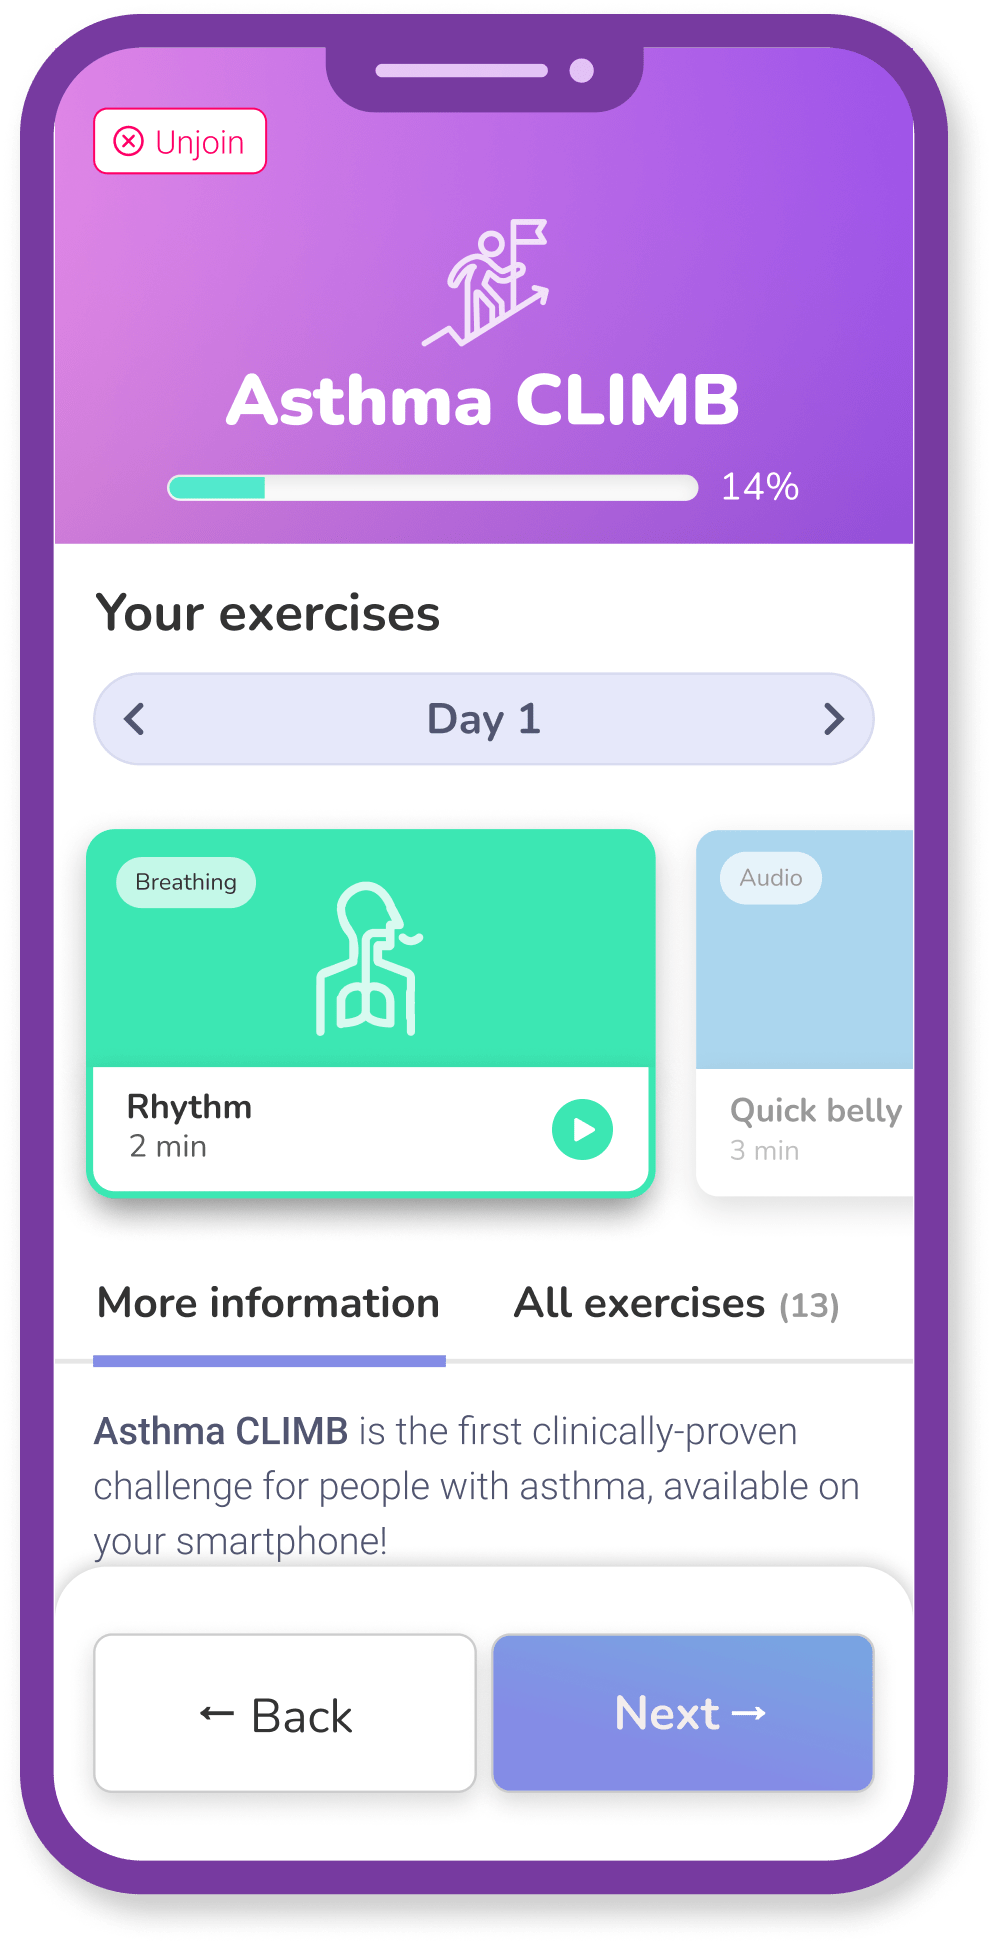 Asthma CLIMB